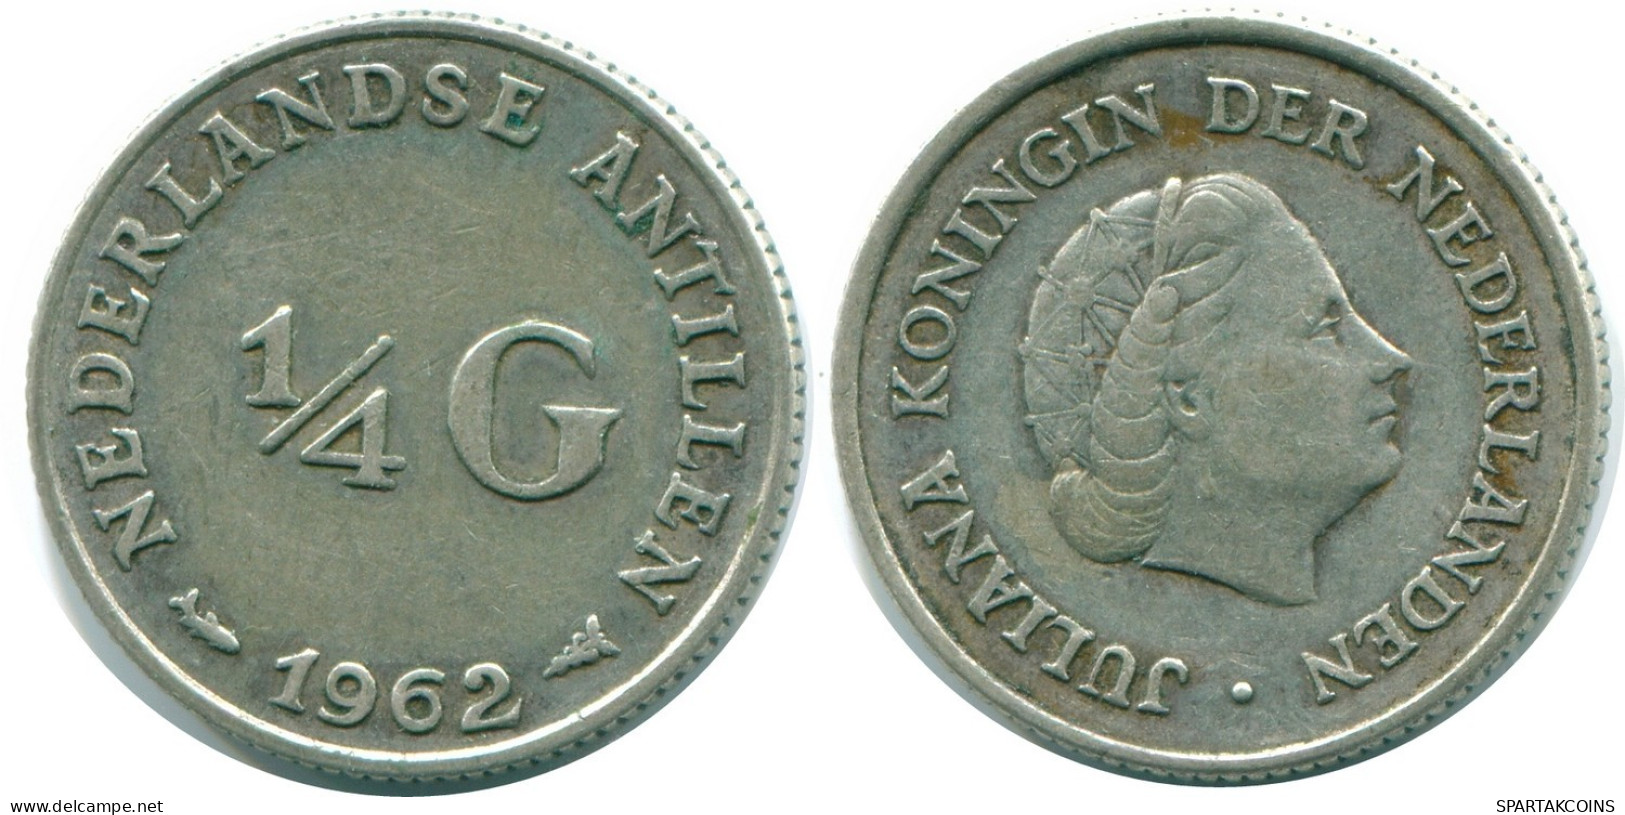 1/4 GULDEN 1962 NIEDERLÄNDISCHE ANTILLEN SILBER Koloniale Münze #NL11135.4.D.A - Netherlands Antilles